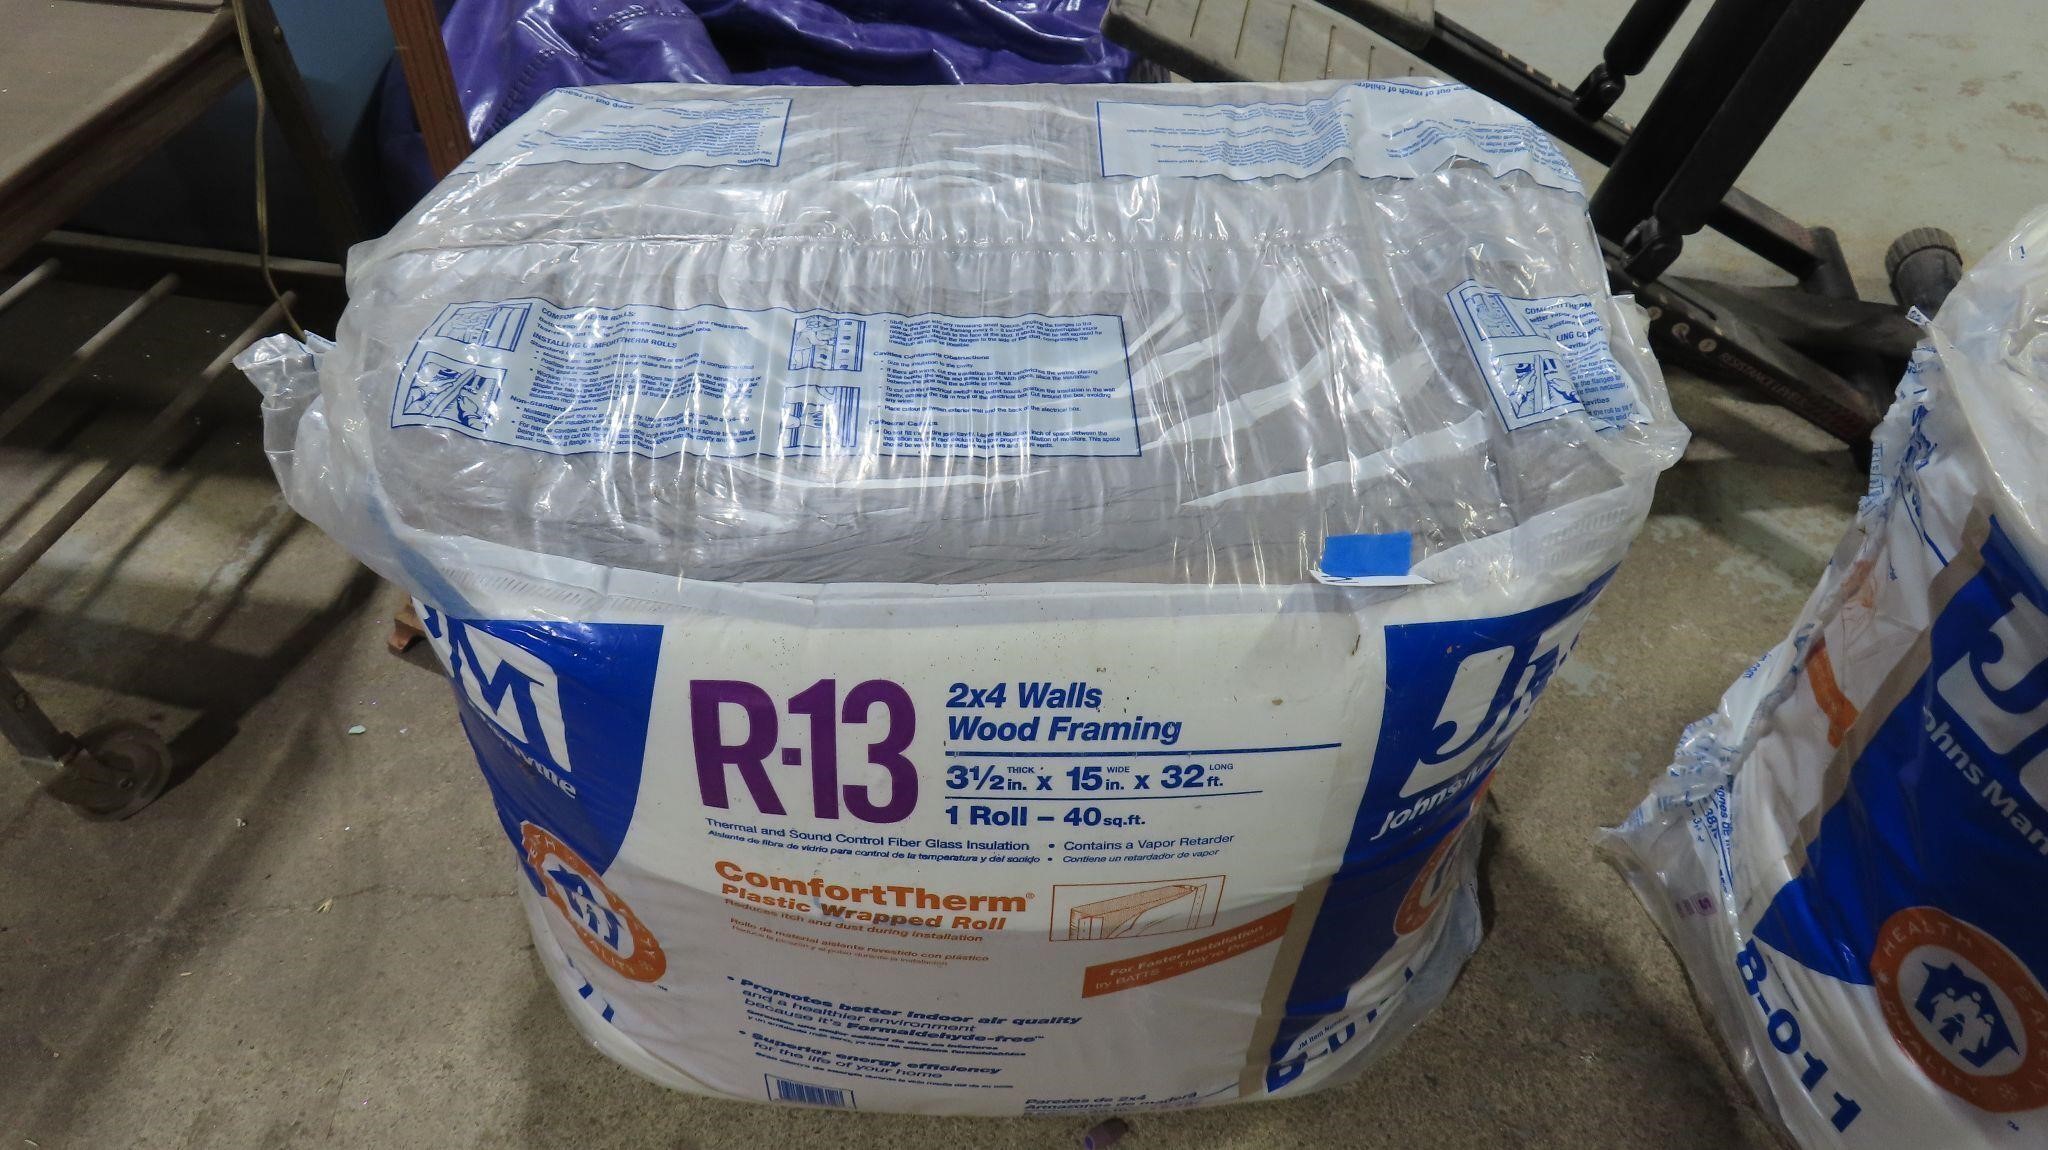 R-13 insulation